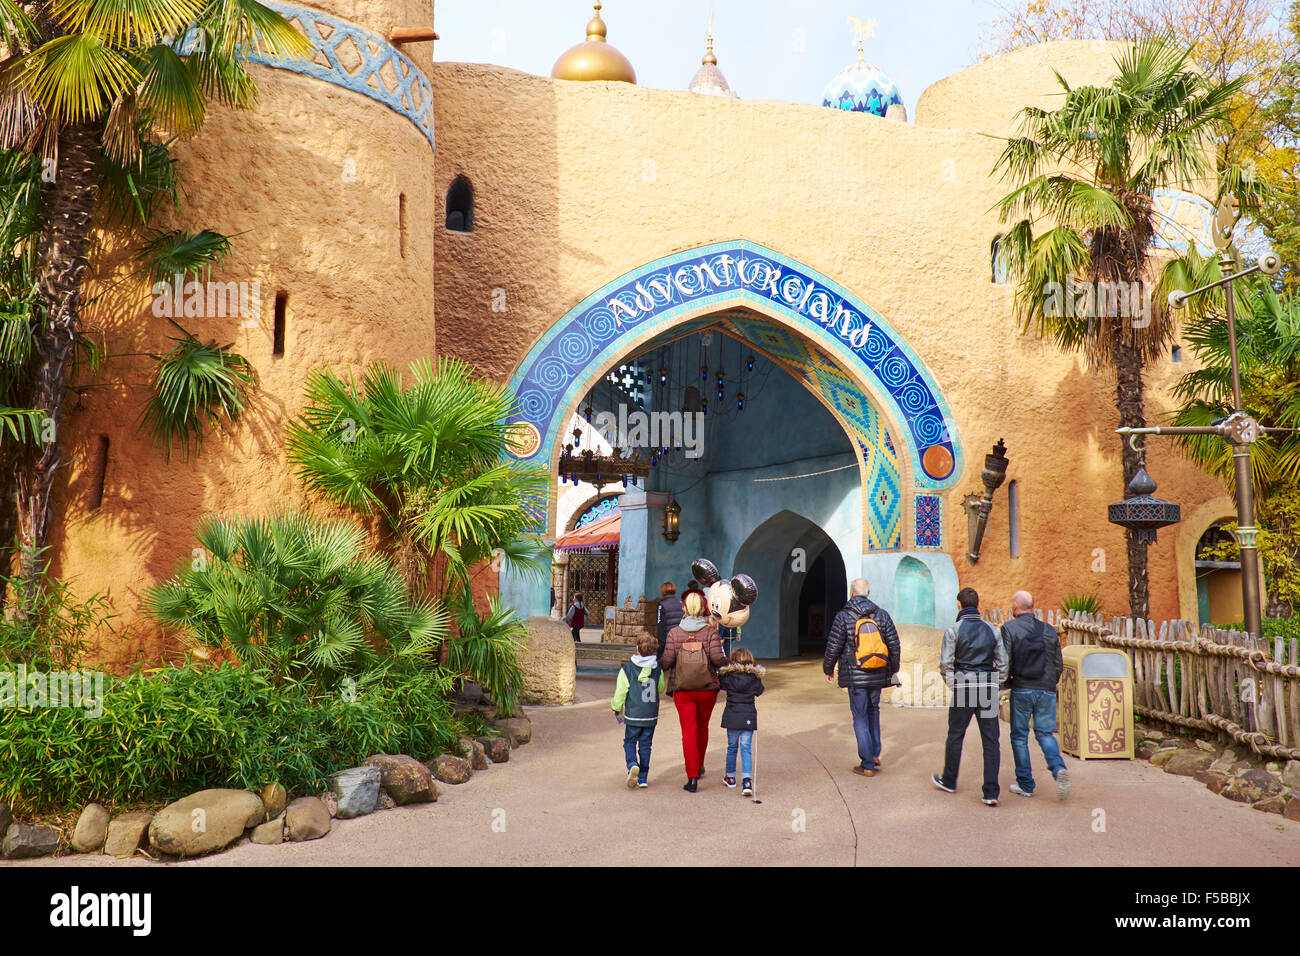 Entrance To Adventureland Disneyland Paris Marne-la-Vallee Chessy France Stock Photo